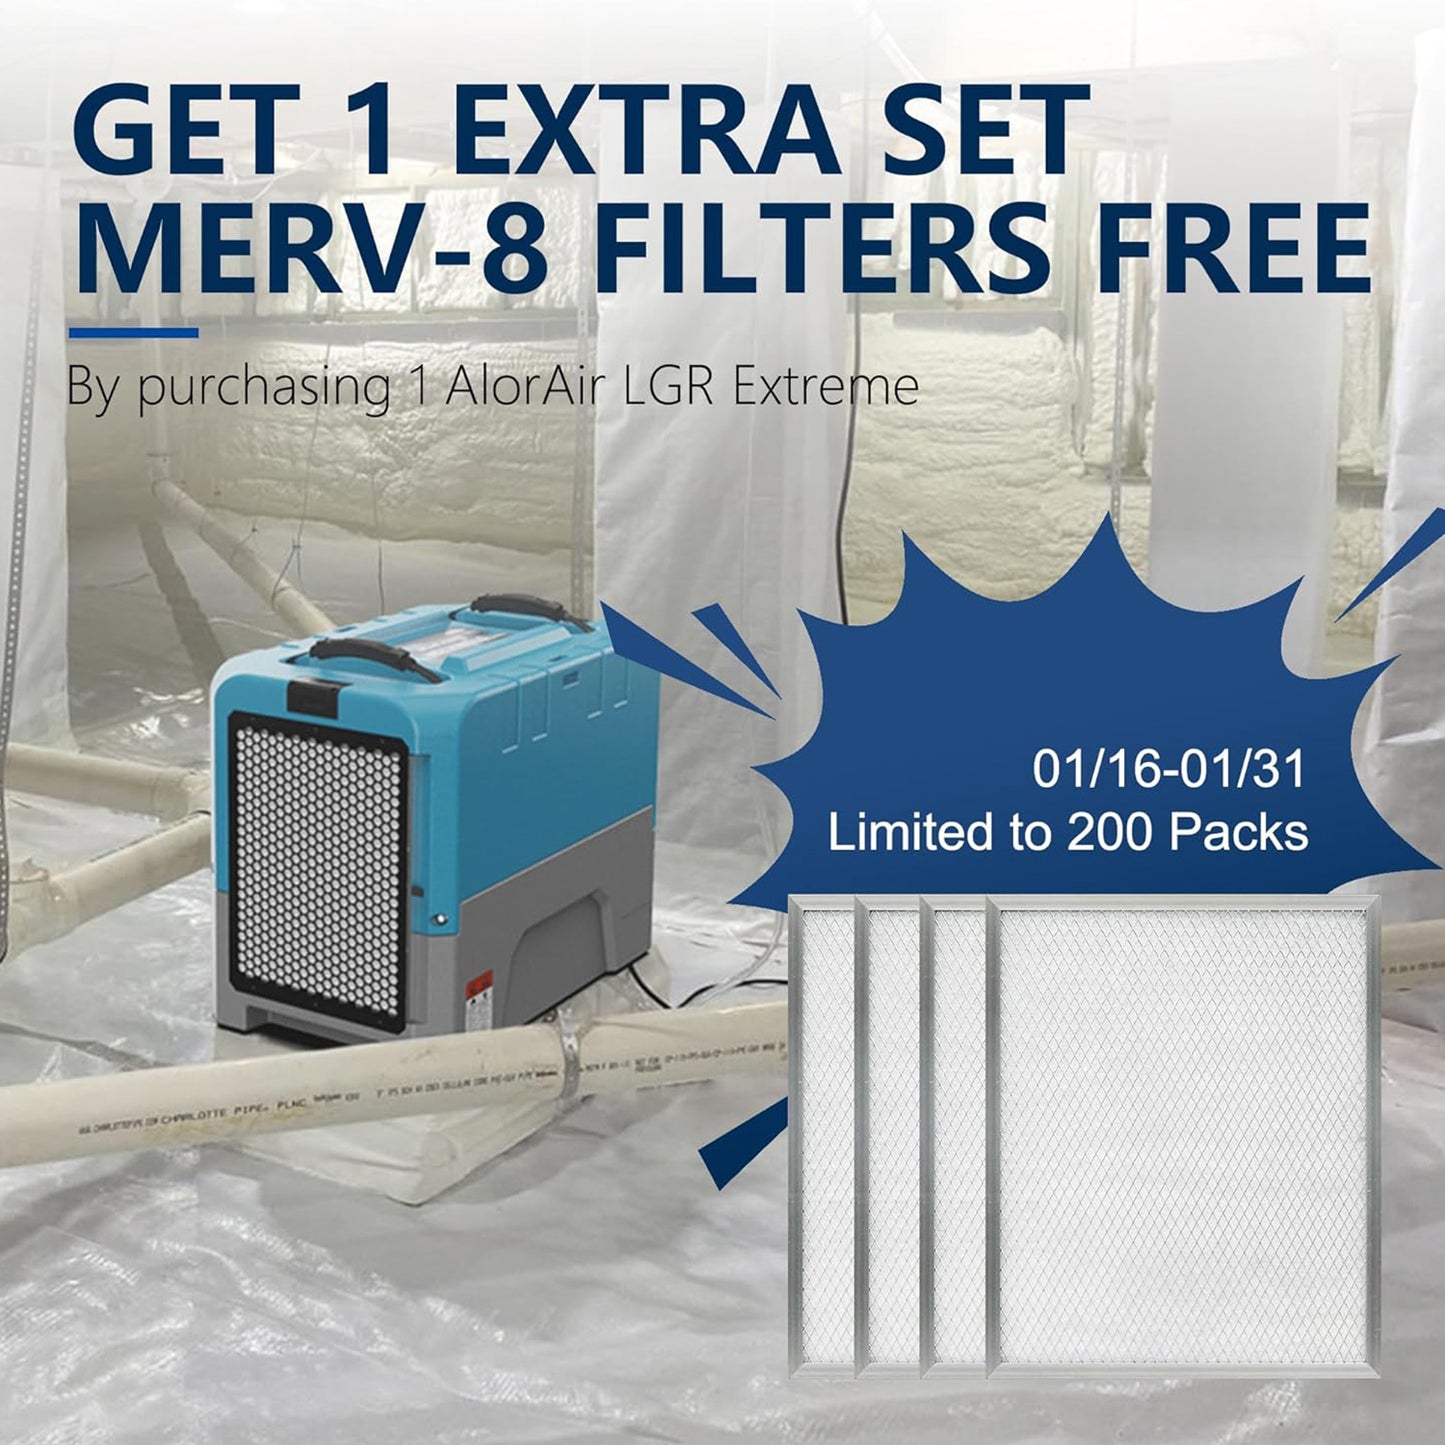 Get 1 extra set of MERV-8 filters free